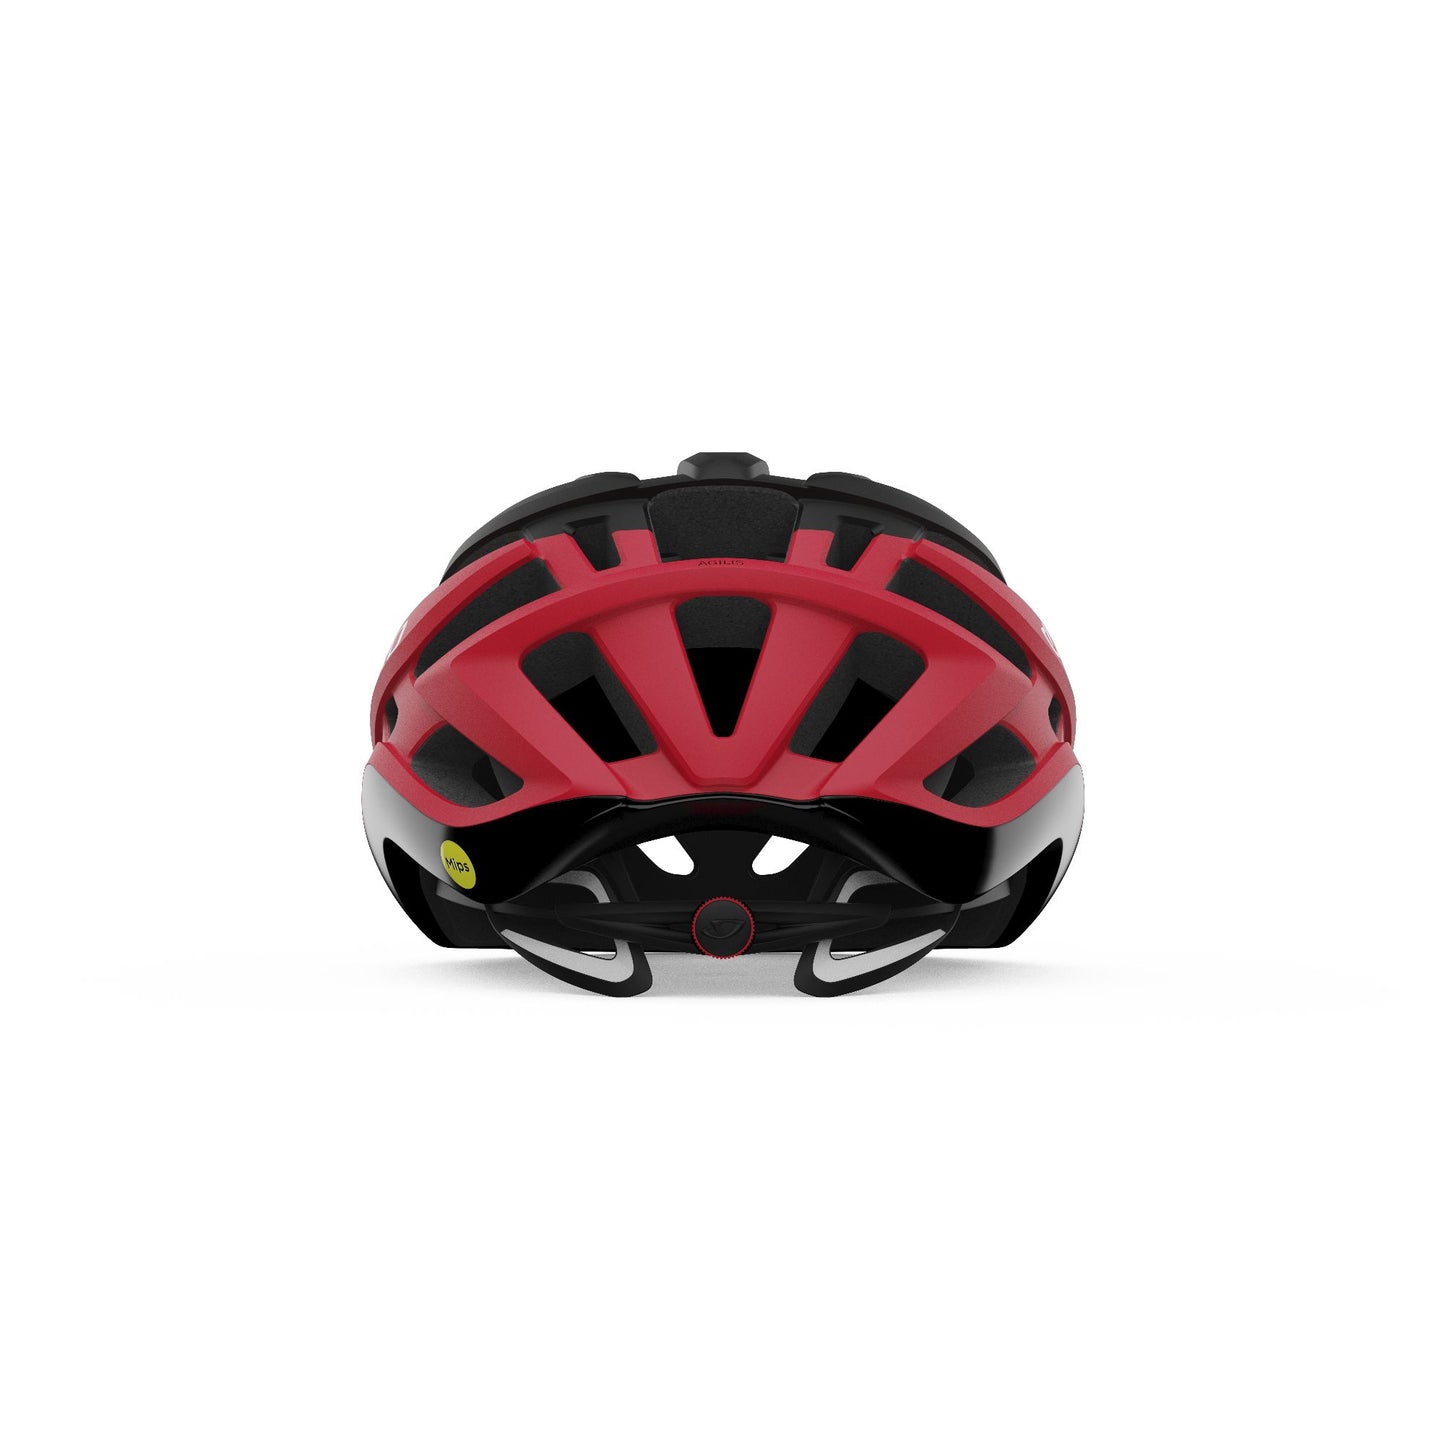 Giro Agilis MIPS Helmet Matte Black Bright Red Bike Helmets